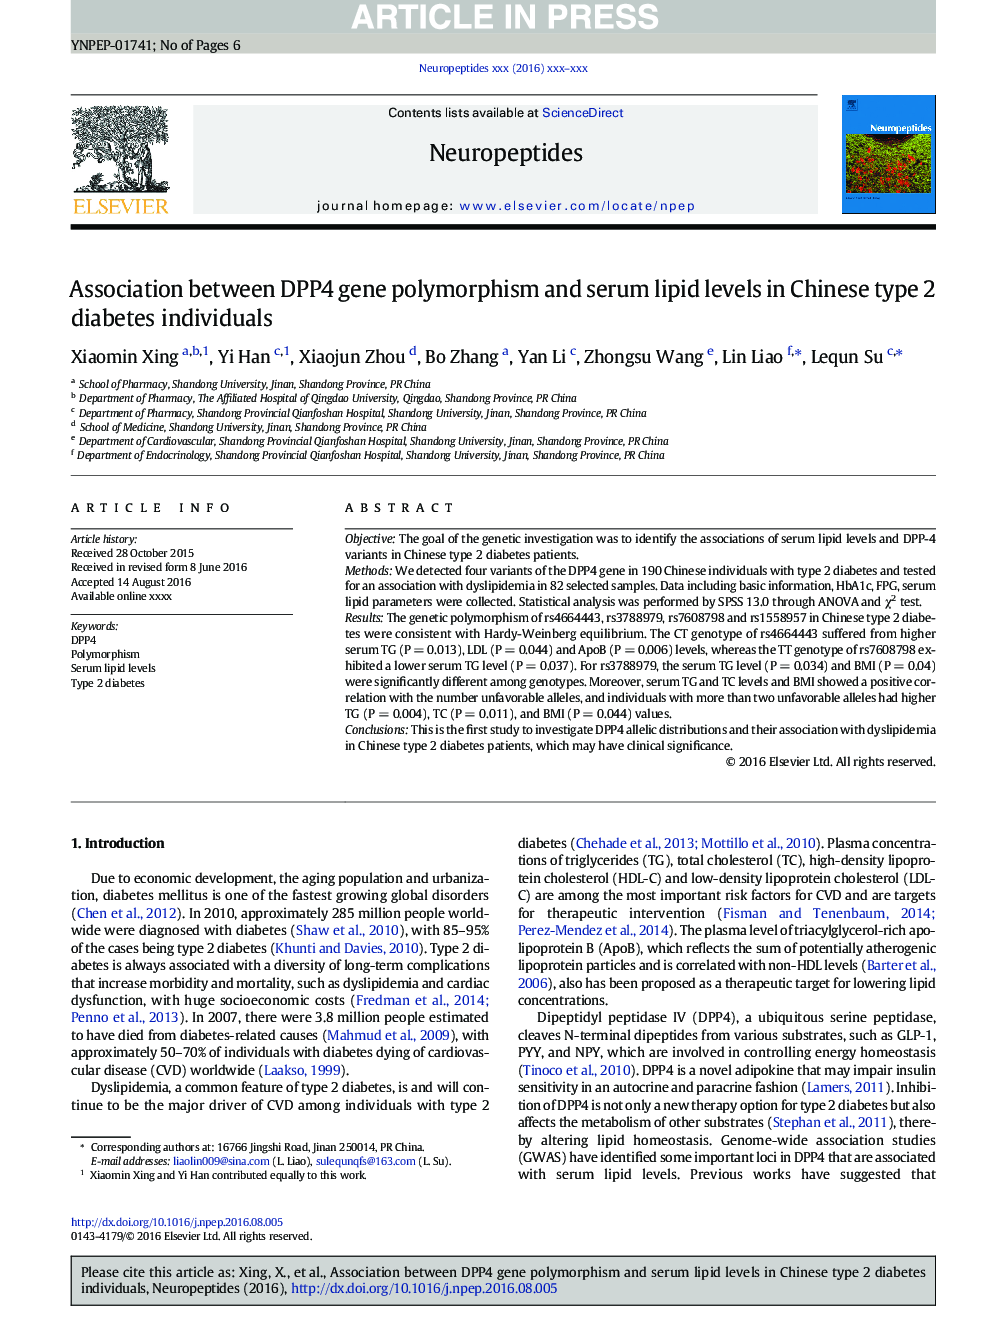 Association between DPP4 gene polymorphism and serum lipid levels in Chinese type 2 diabetes individuals